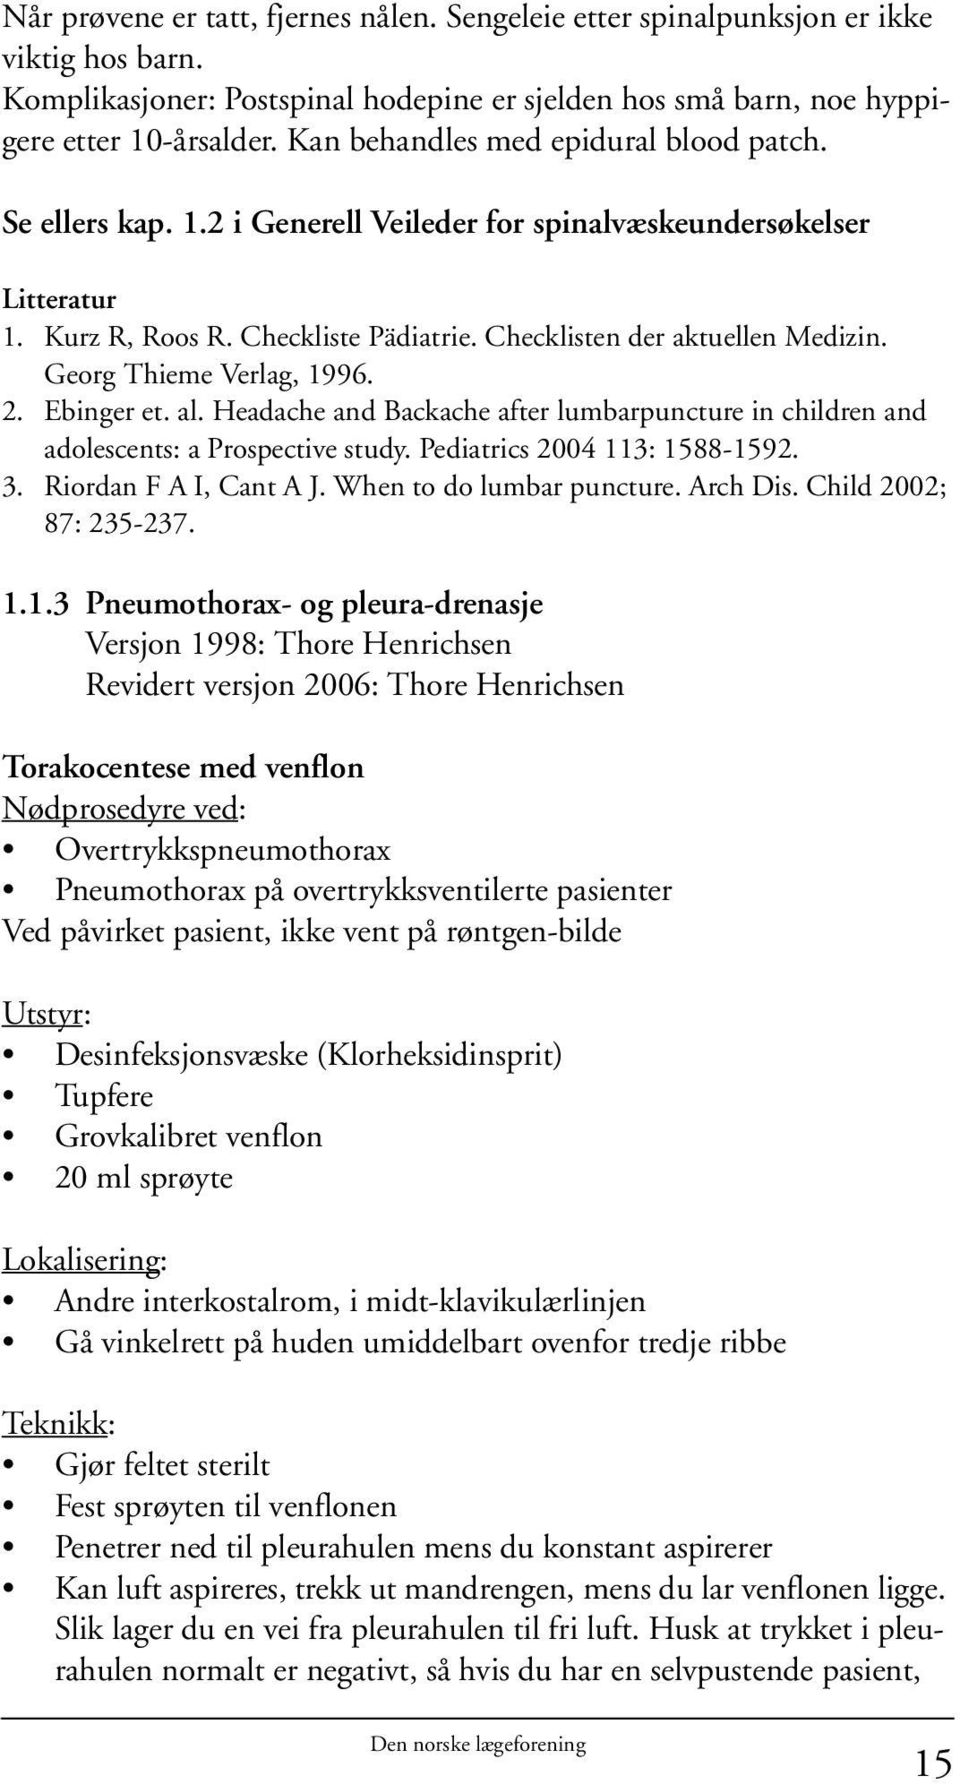 Georg Thieme Verlag, 1996. 2. Ebinger et. al. Headache and Backache after lumbarpuncture in children and adolescents: a Prospective study. Pediatrics 2004 113: 1588-1592. 3. Riordan F A I, Cant A J.